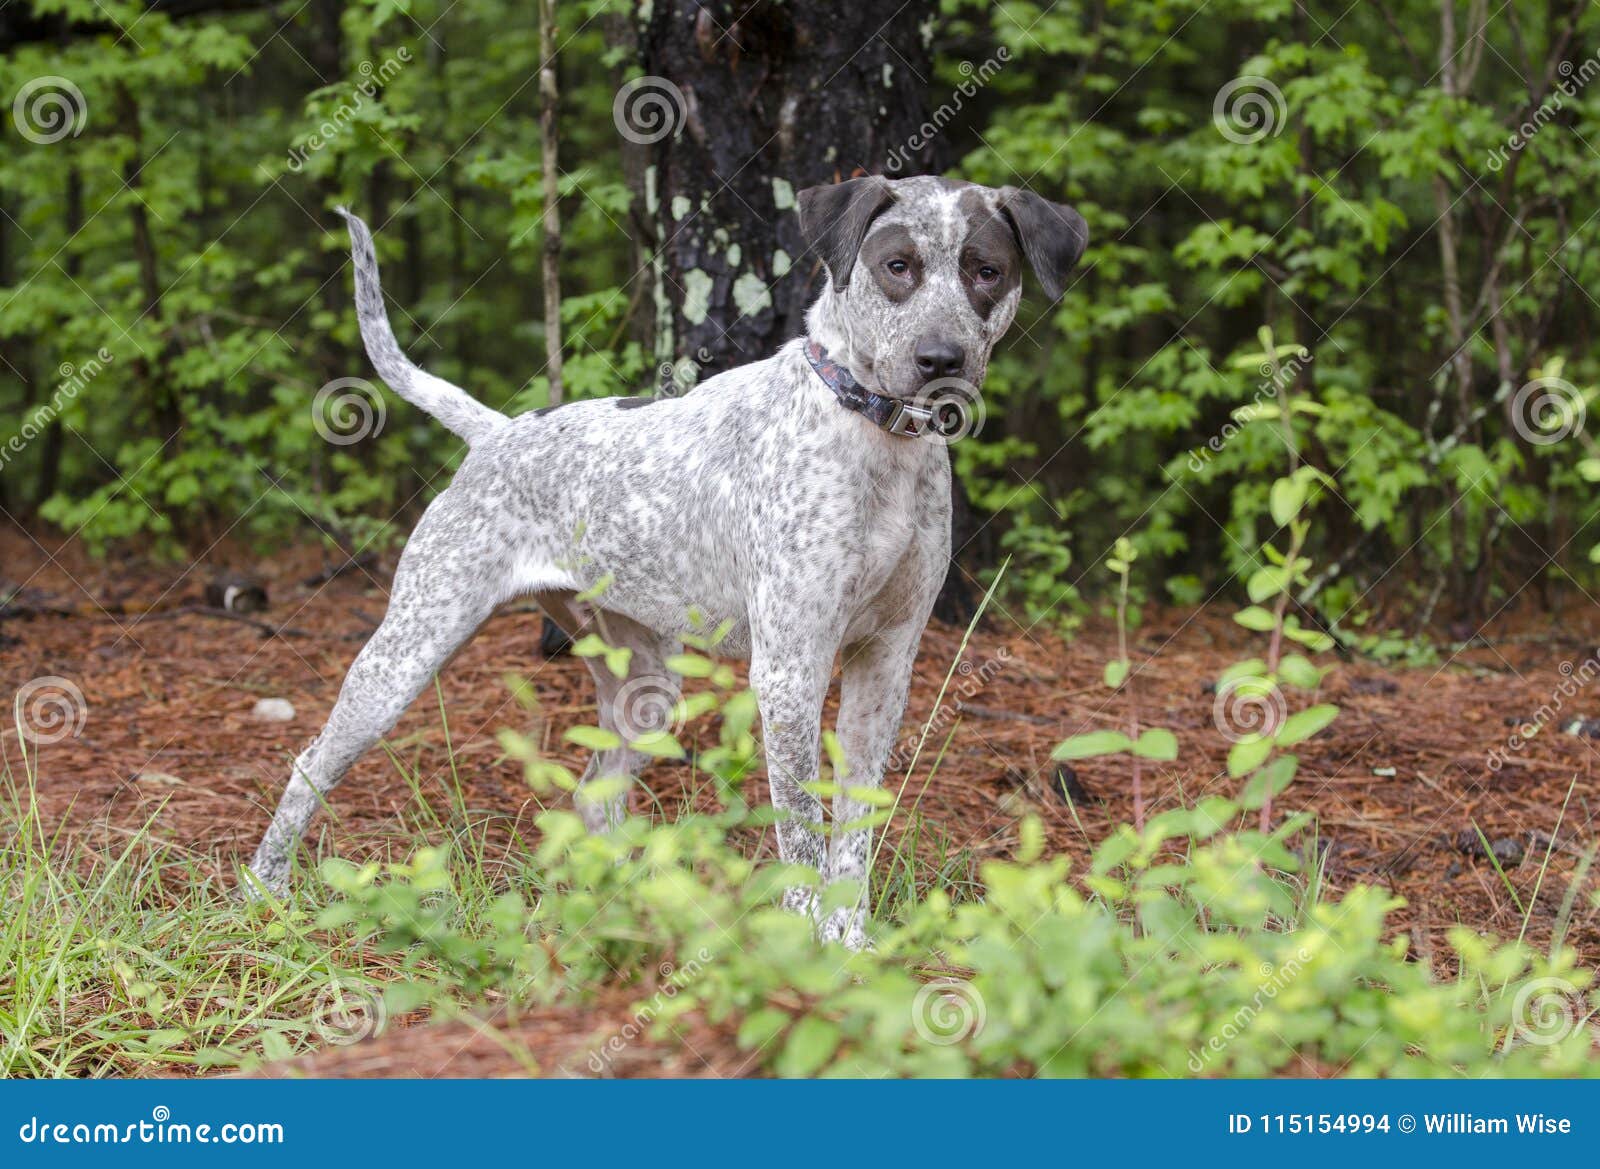 Spotted Bird Dog Pointer Dog, Pet Rescue Adoption Photography Stock Photo -  Image of georgia, chocolate: 115154994